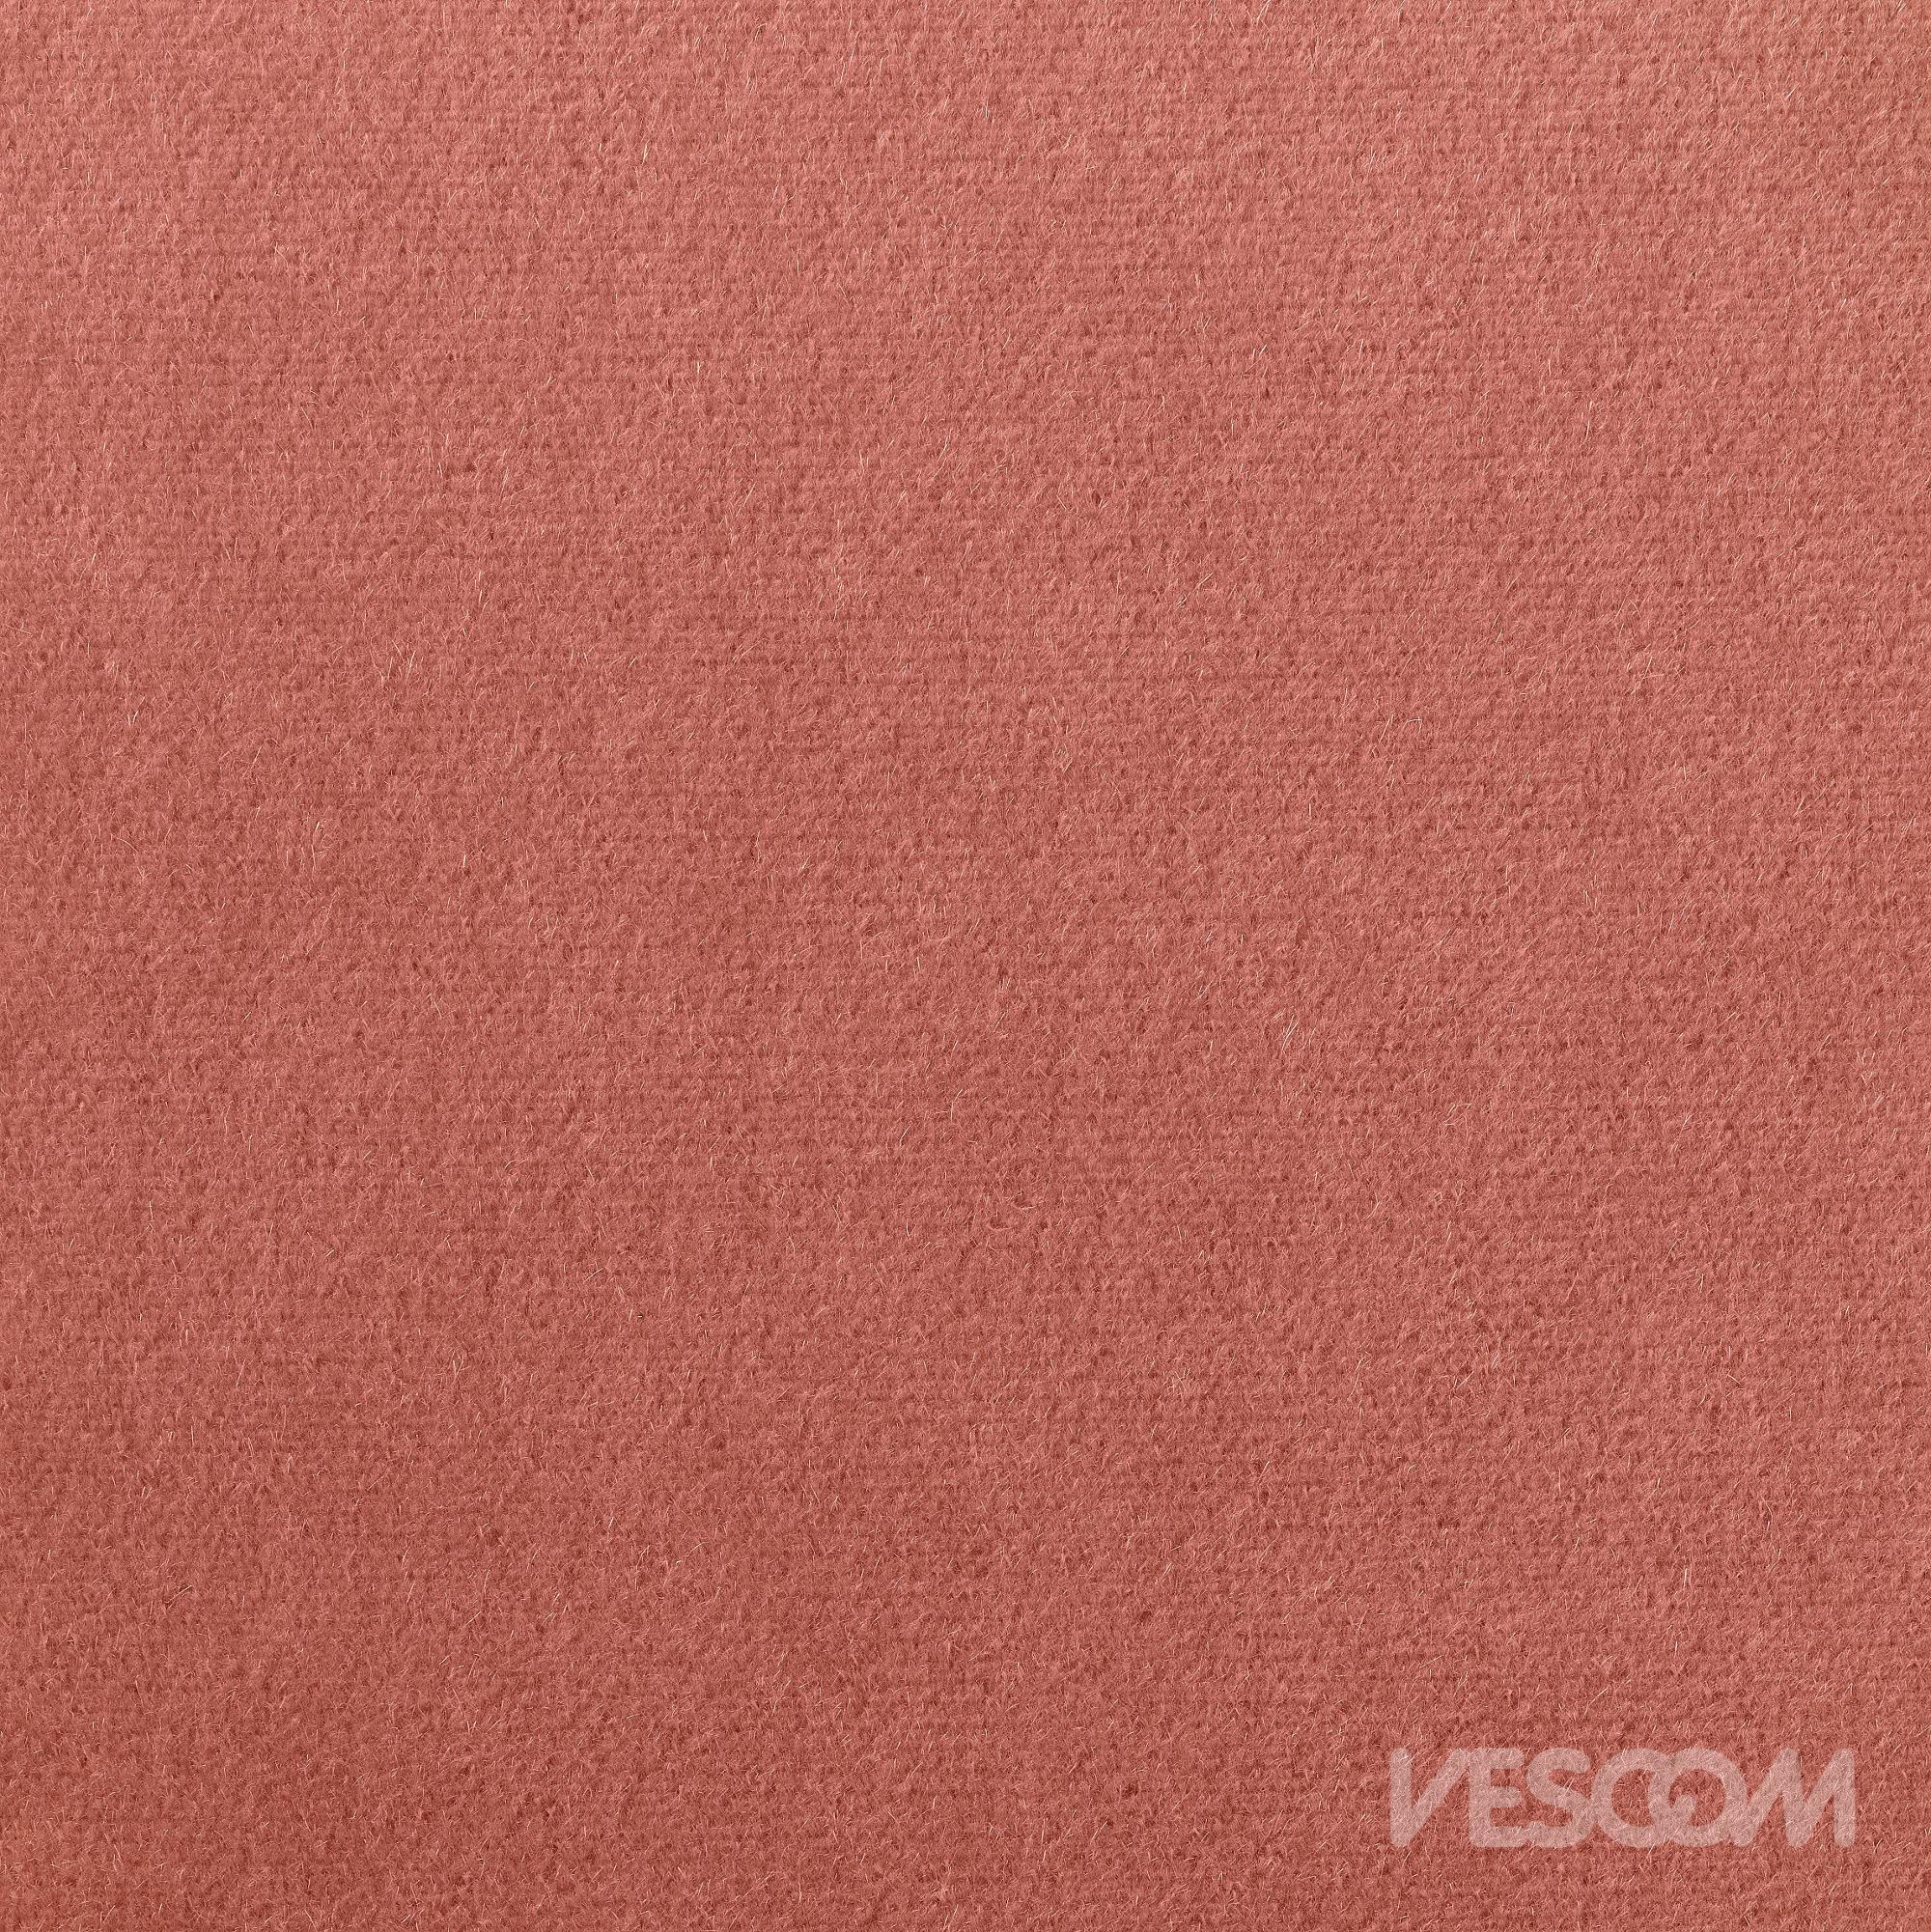 Vescom Ariana Upholstery Fabric 7061.33